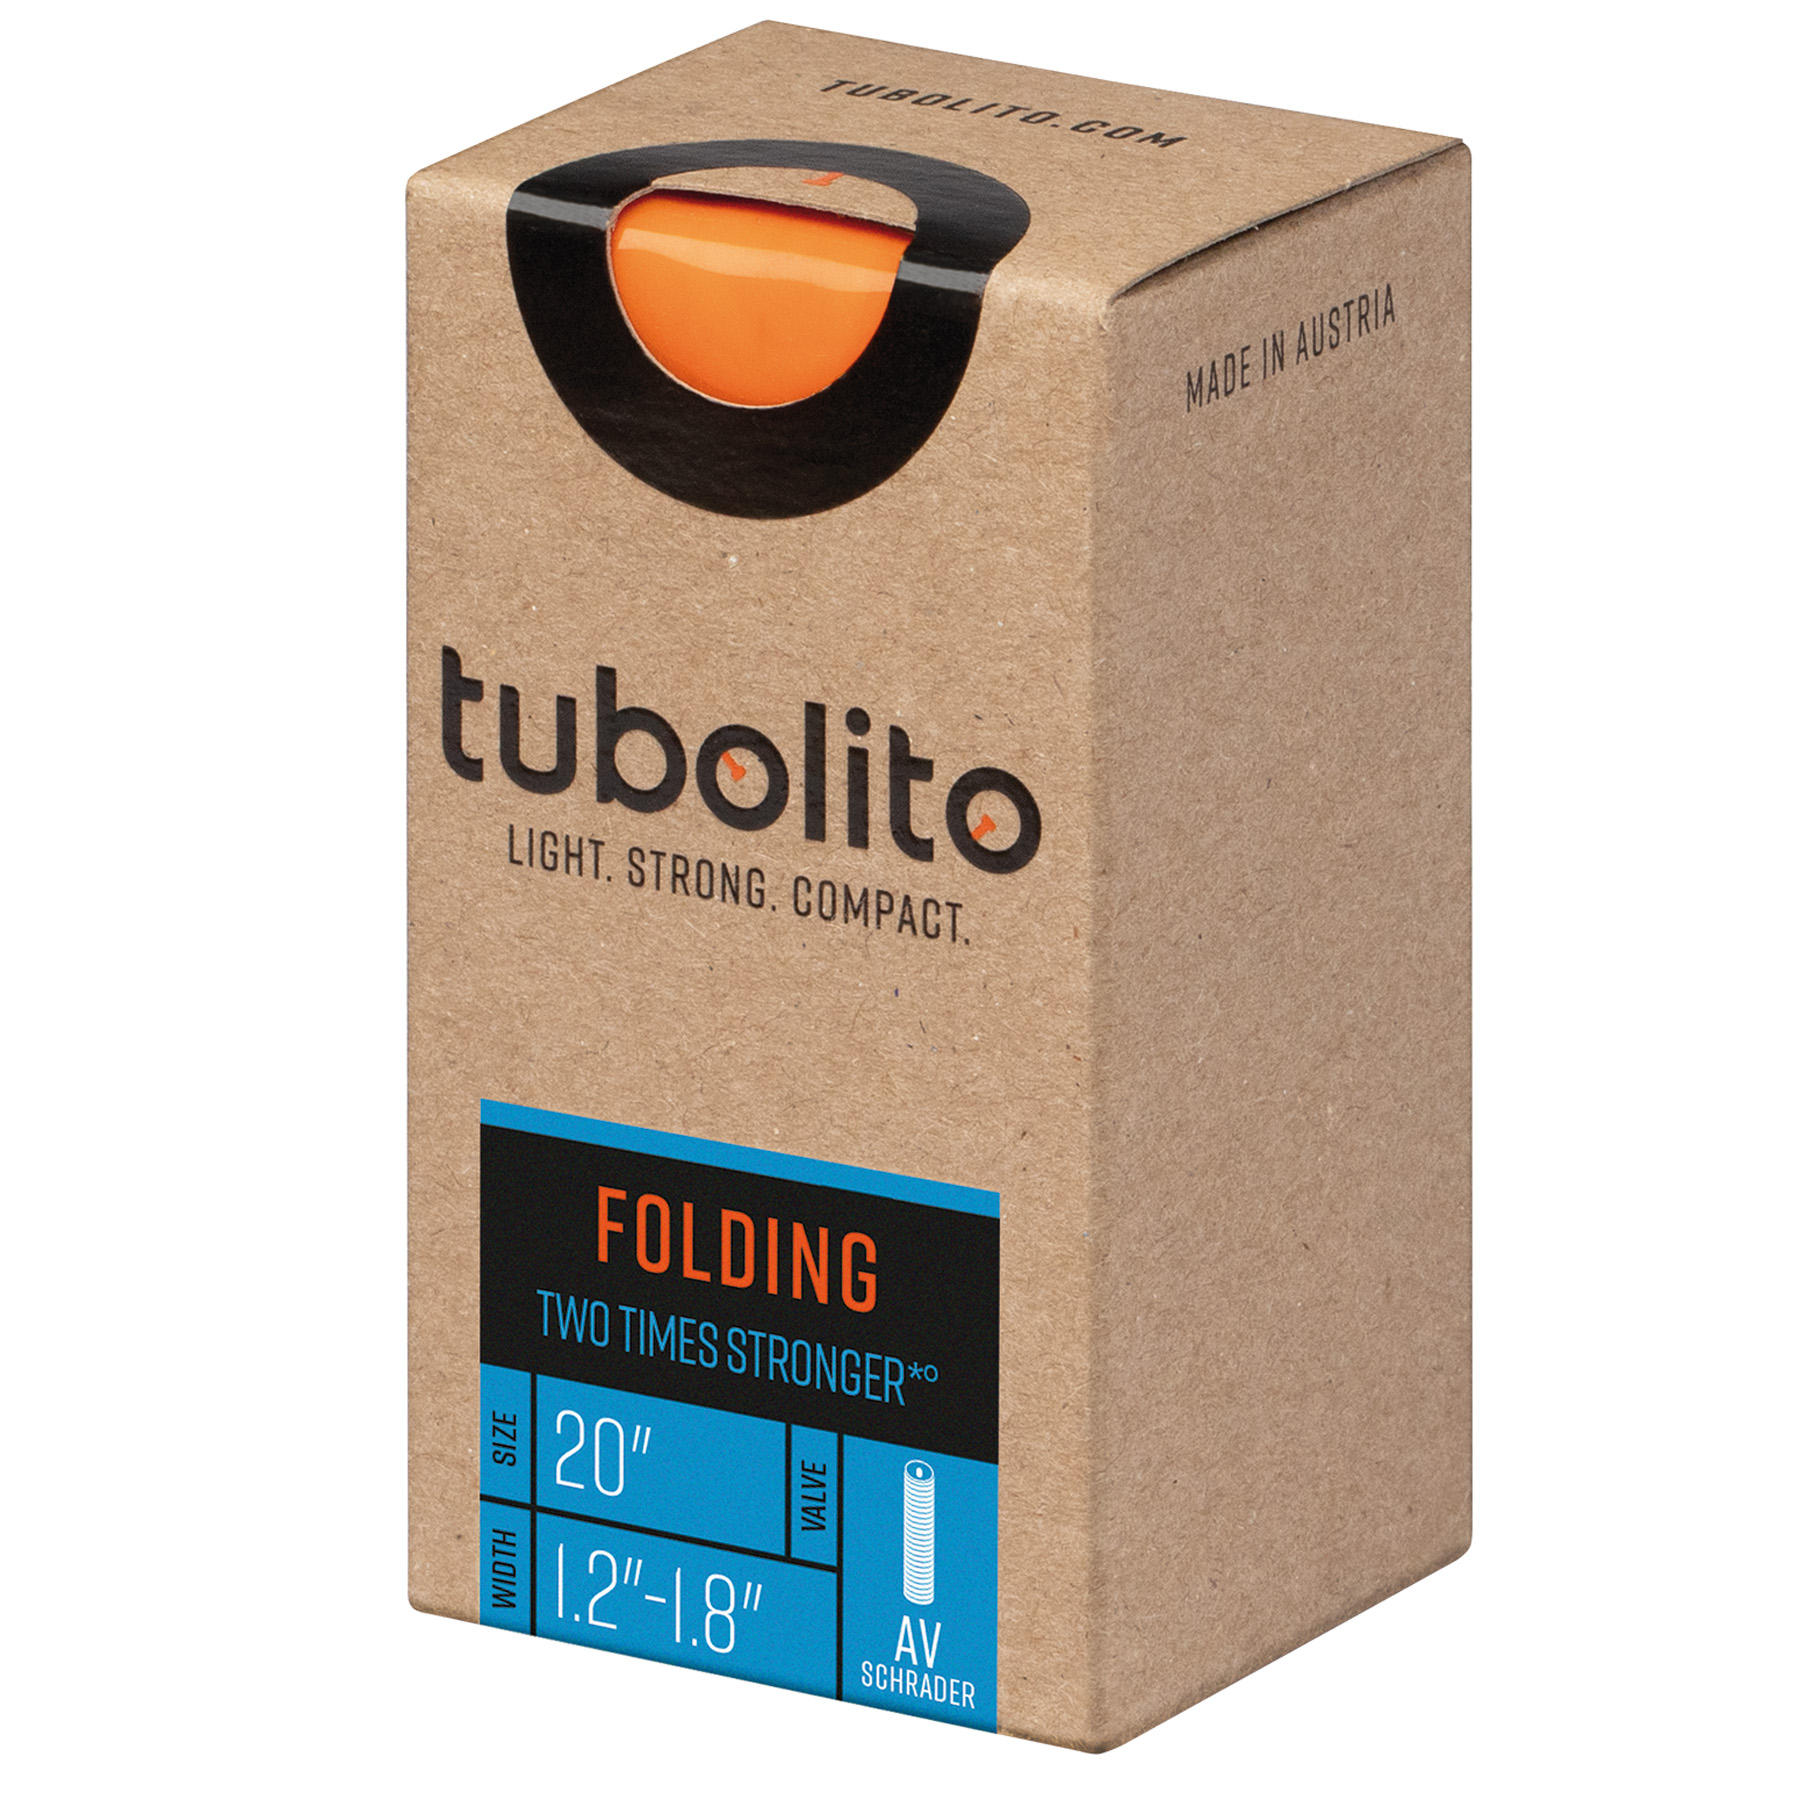 Image of Tubolito Tubo Foldingbike Tube - 20"x1.2-1.8" - Schrader - 40mm